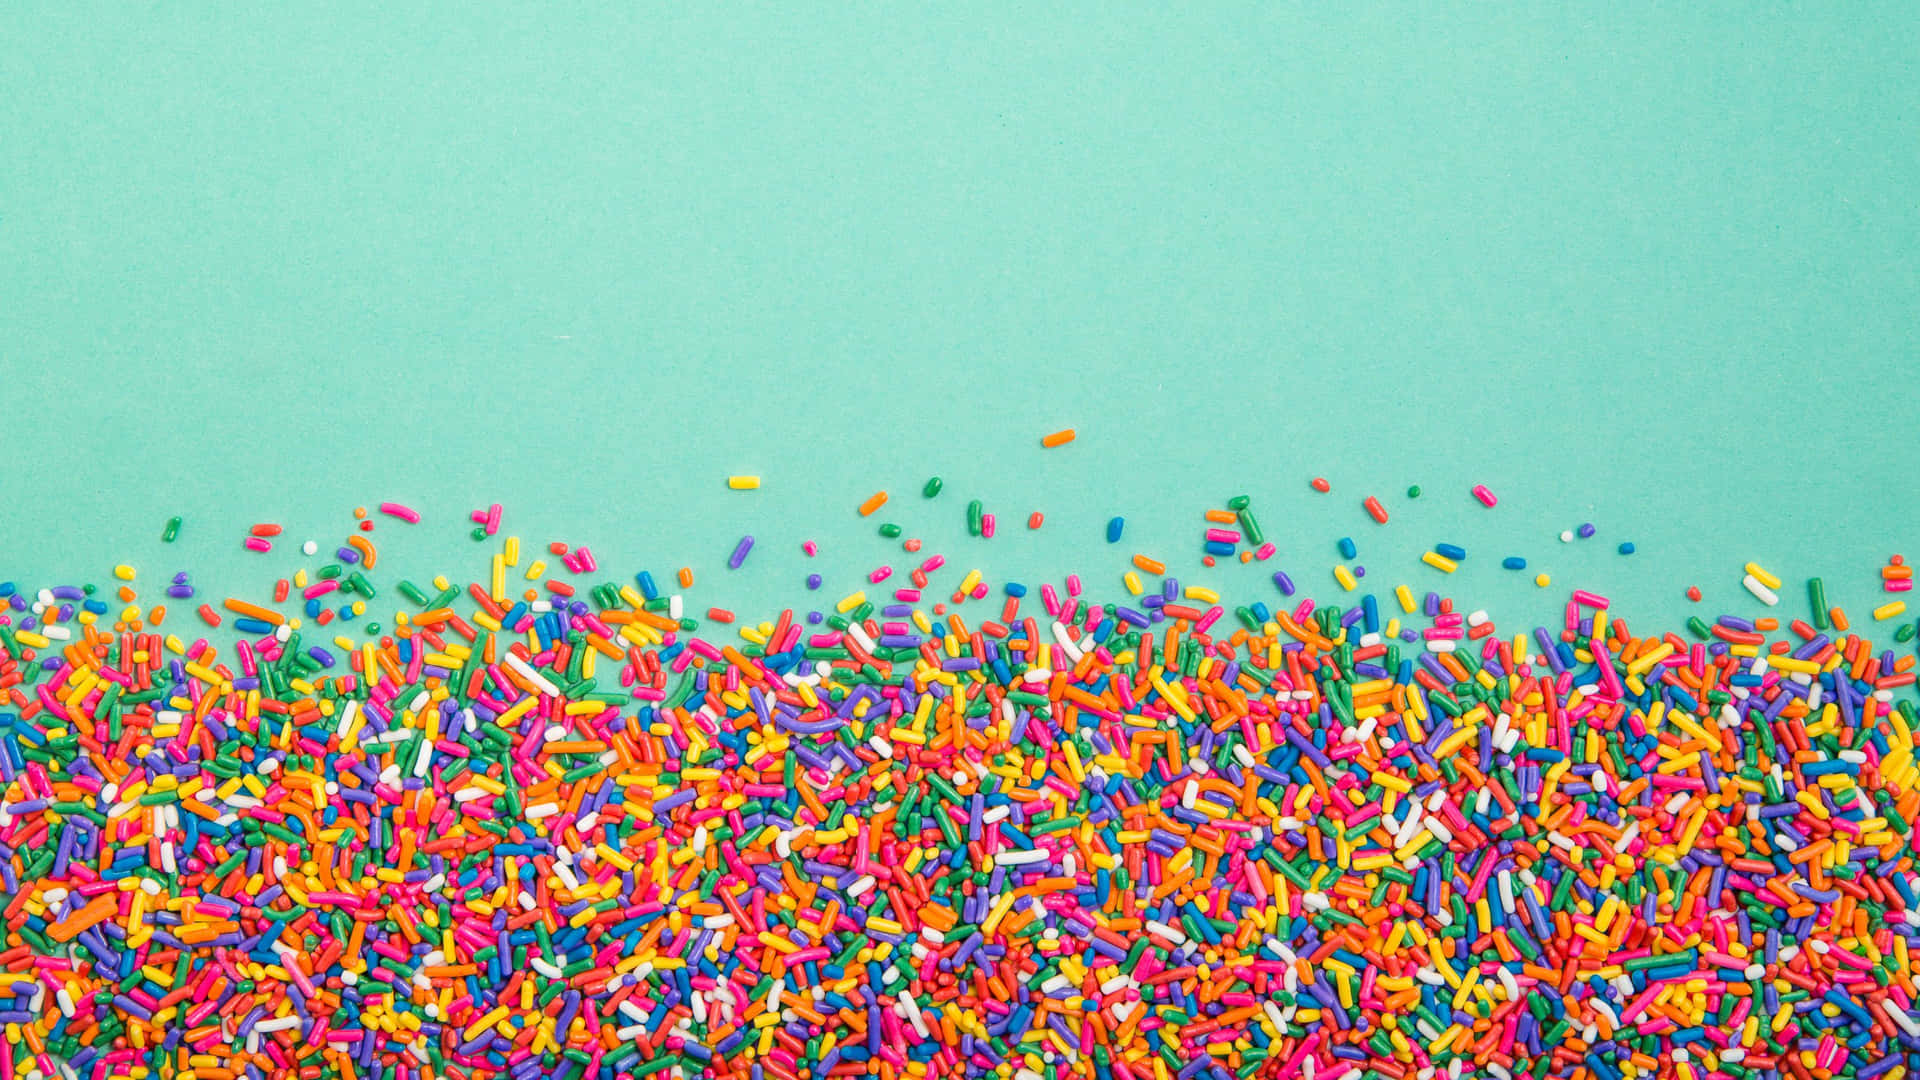 Colorful Sprinkleson Teal Background.jpg Wallpaper